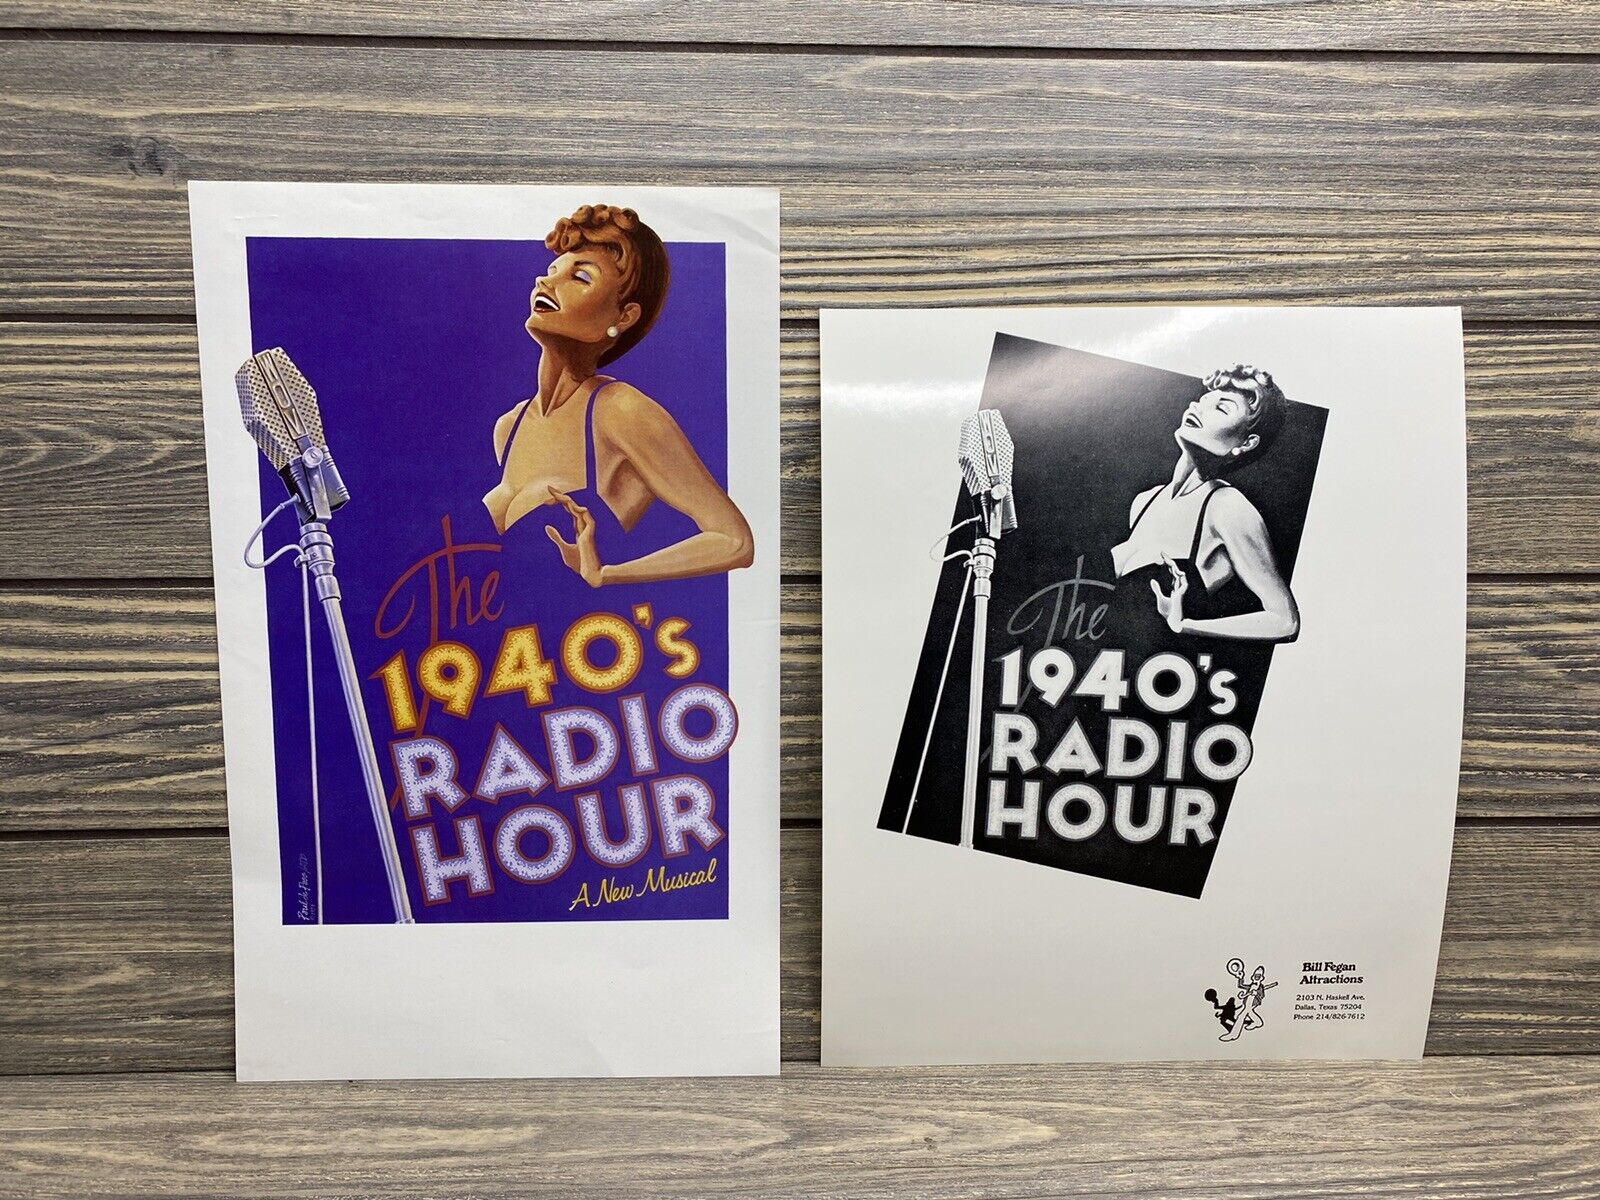 Vintage The 1940s Radio Show 8x10 Press Release Photo Bill Fegan Attractions 